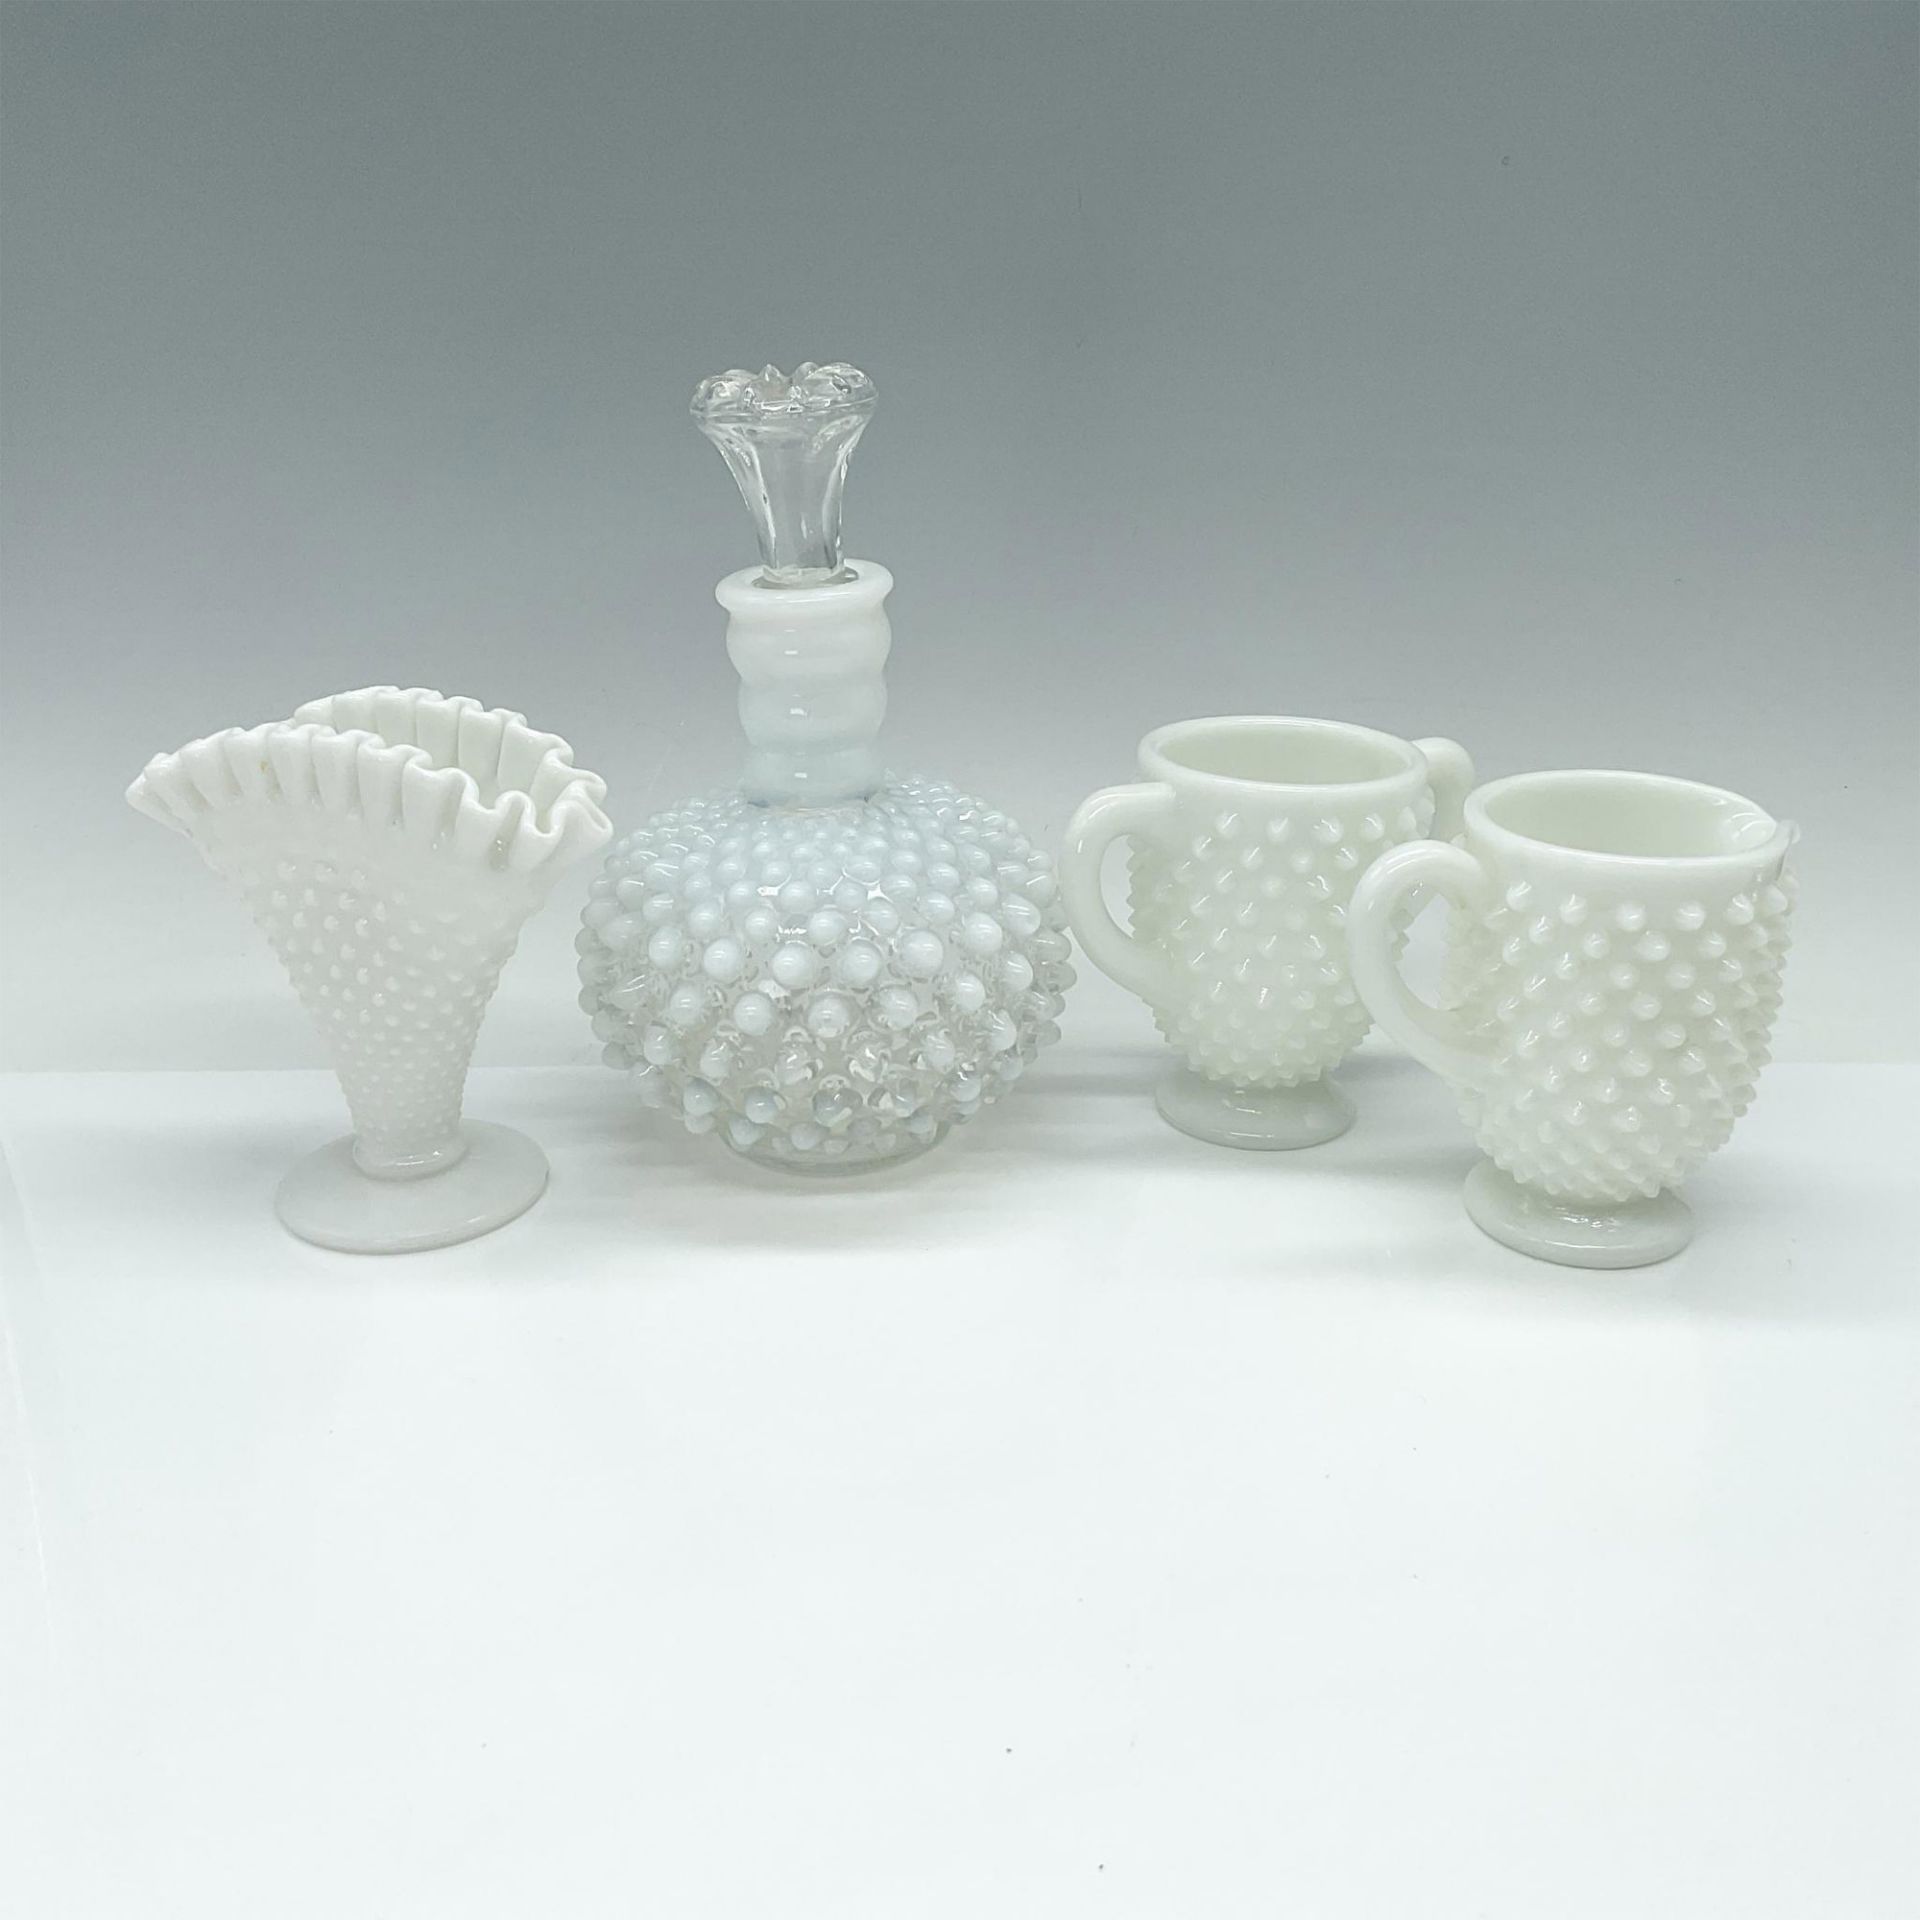 4pc Fenton Hobnail Milk Glass Dish Grouping - Image 2 of 3